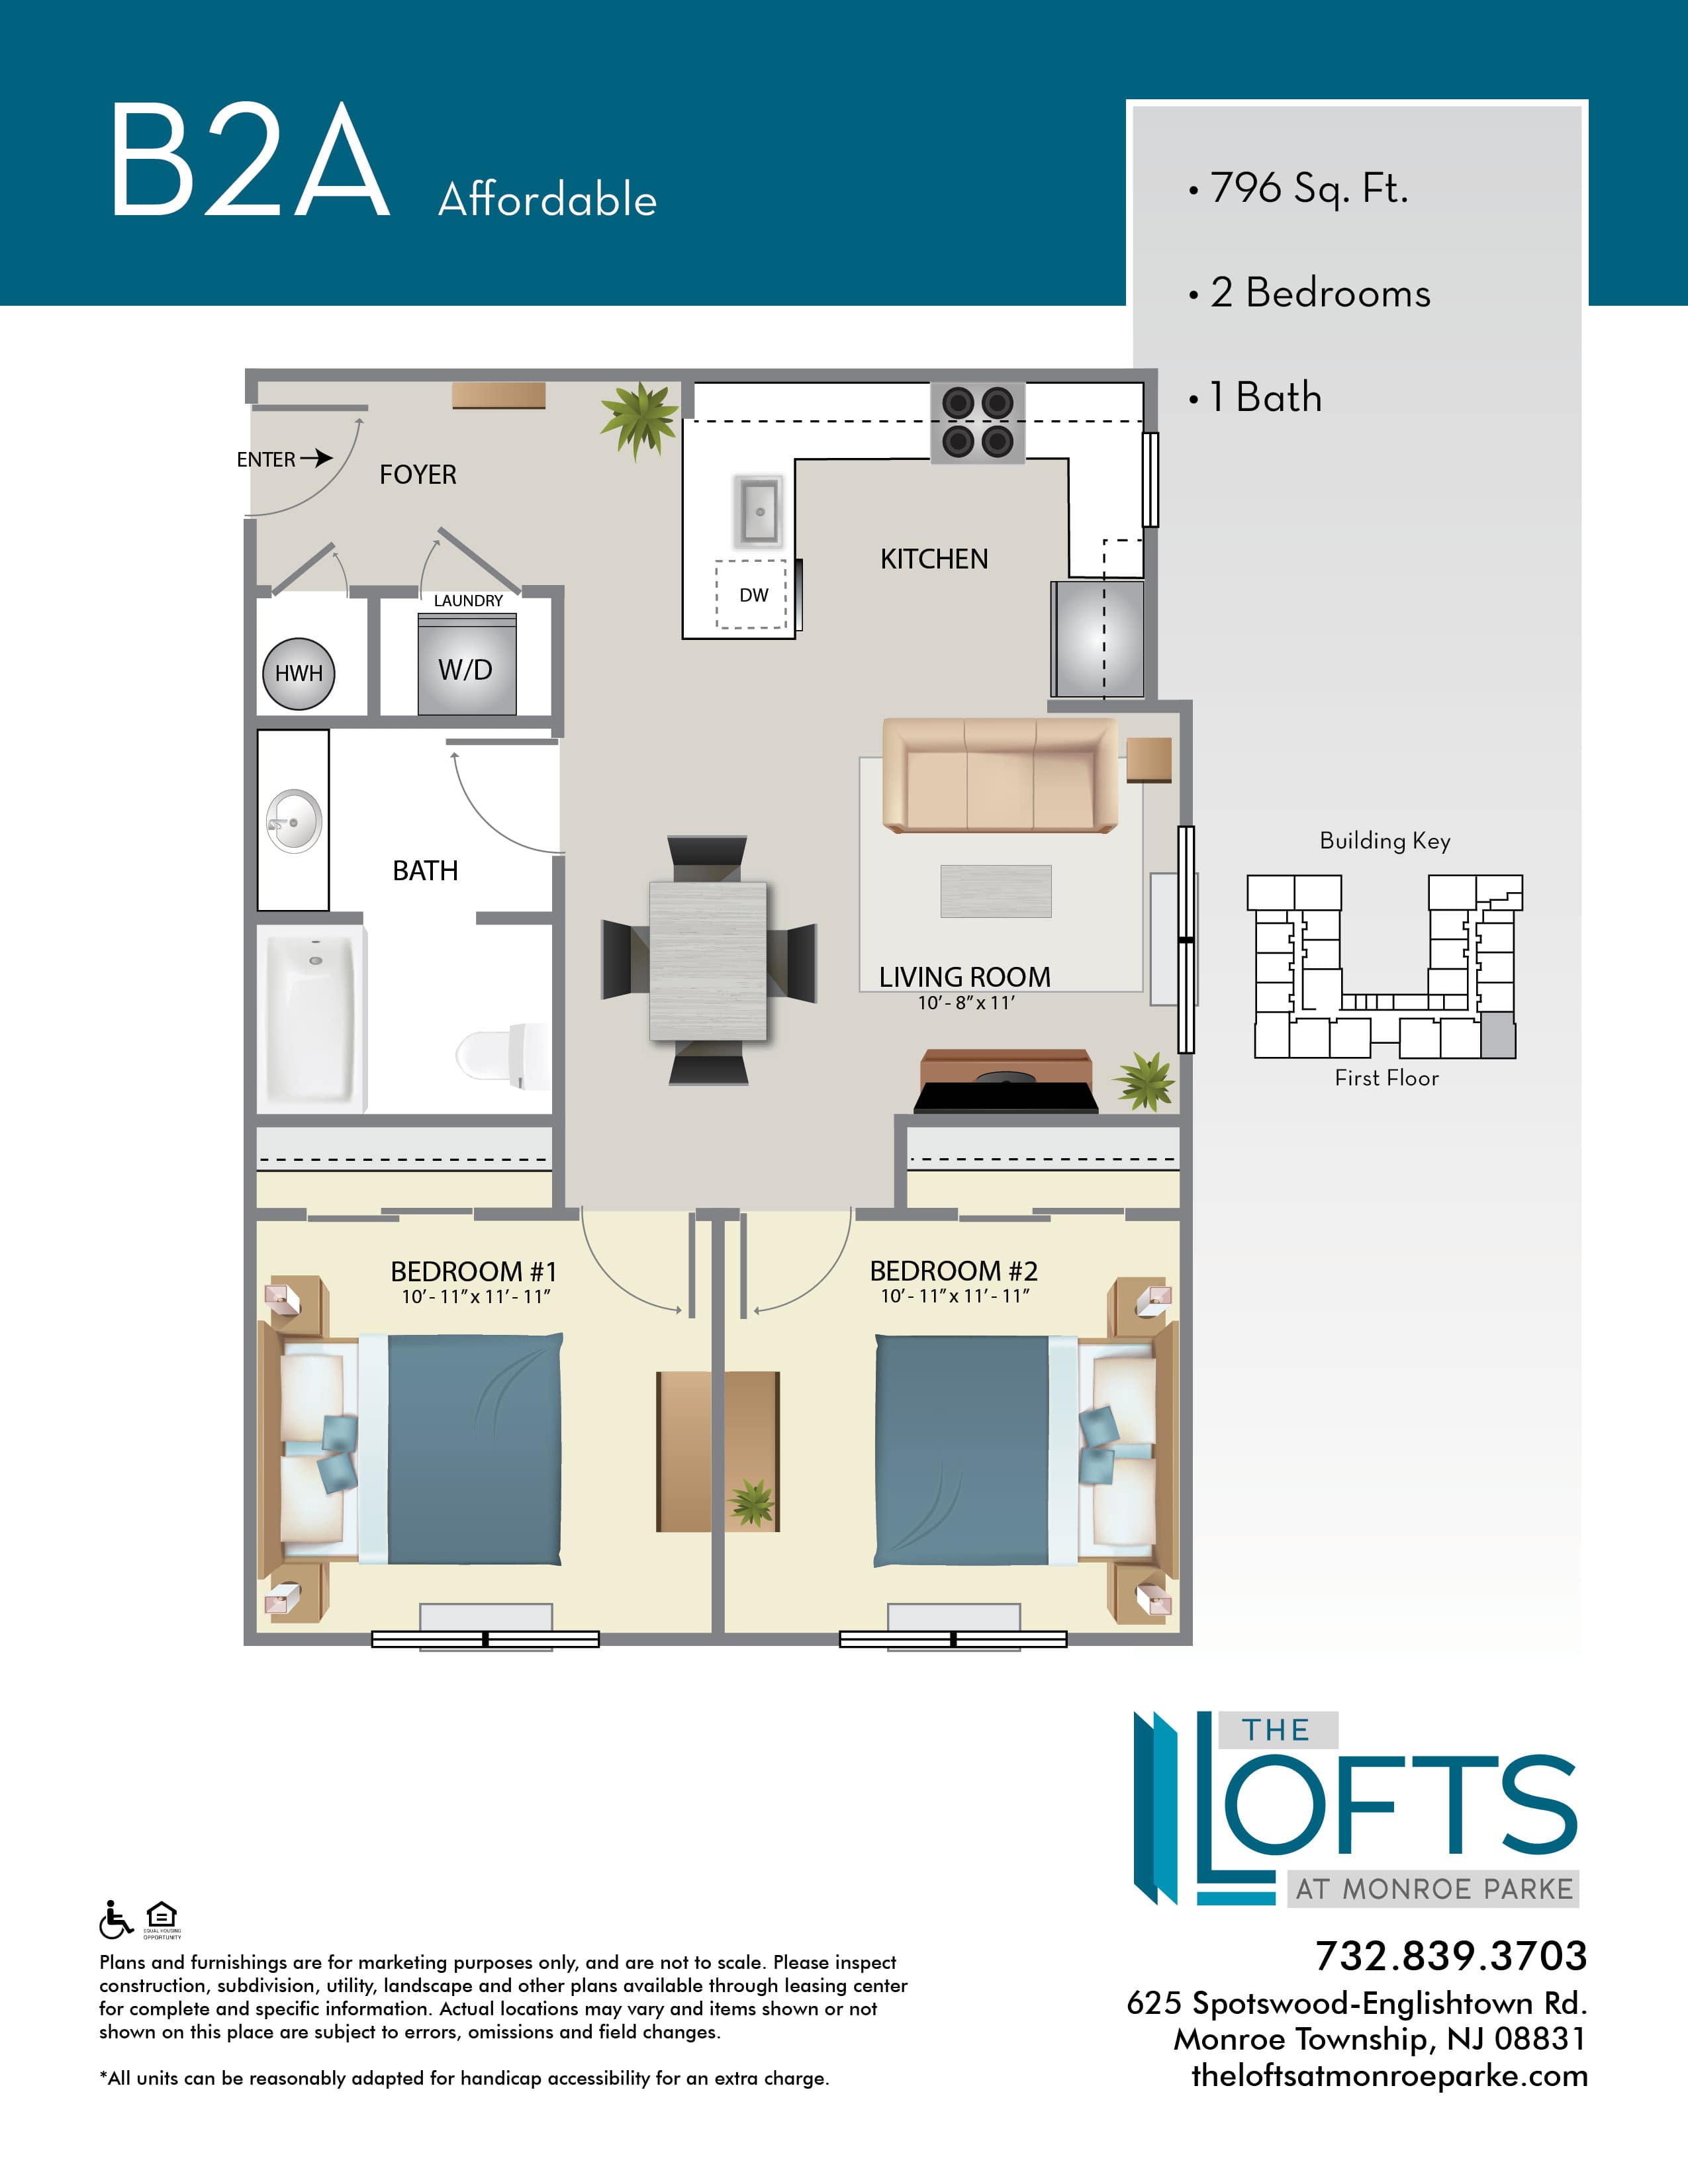 The Lofts at Monroe Park Apartment Floor Plan 2A